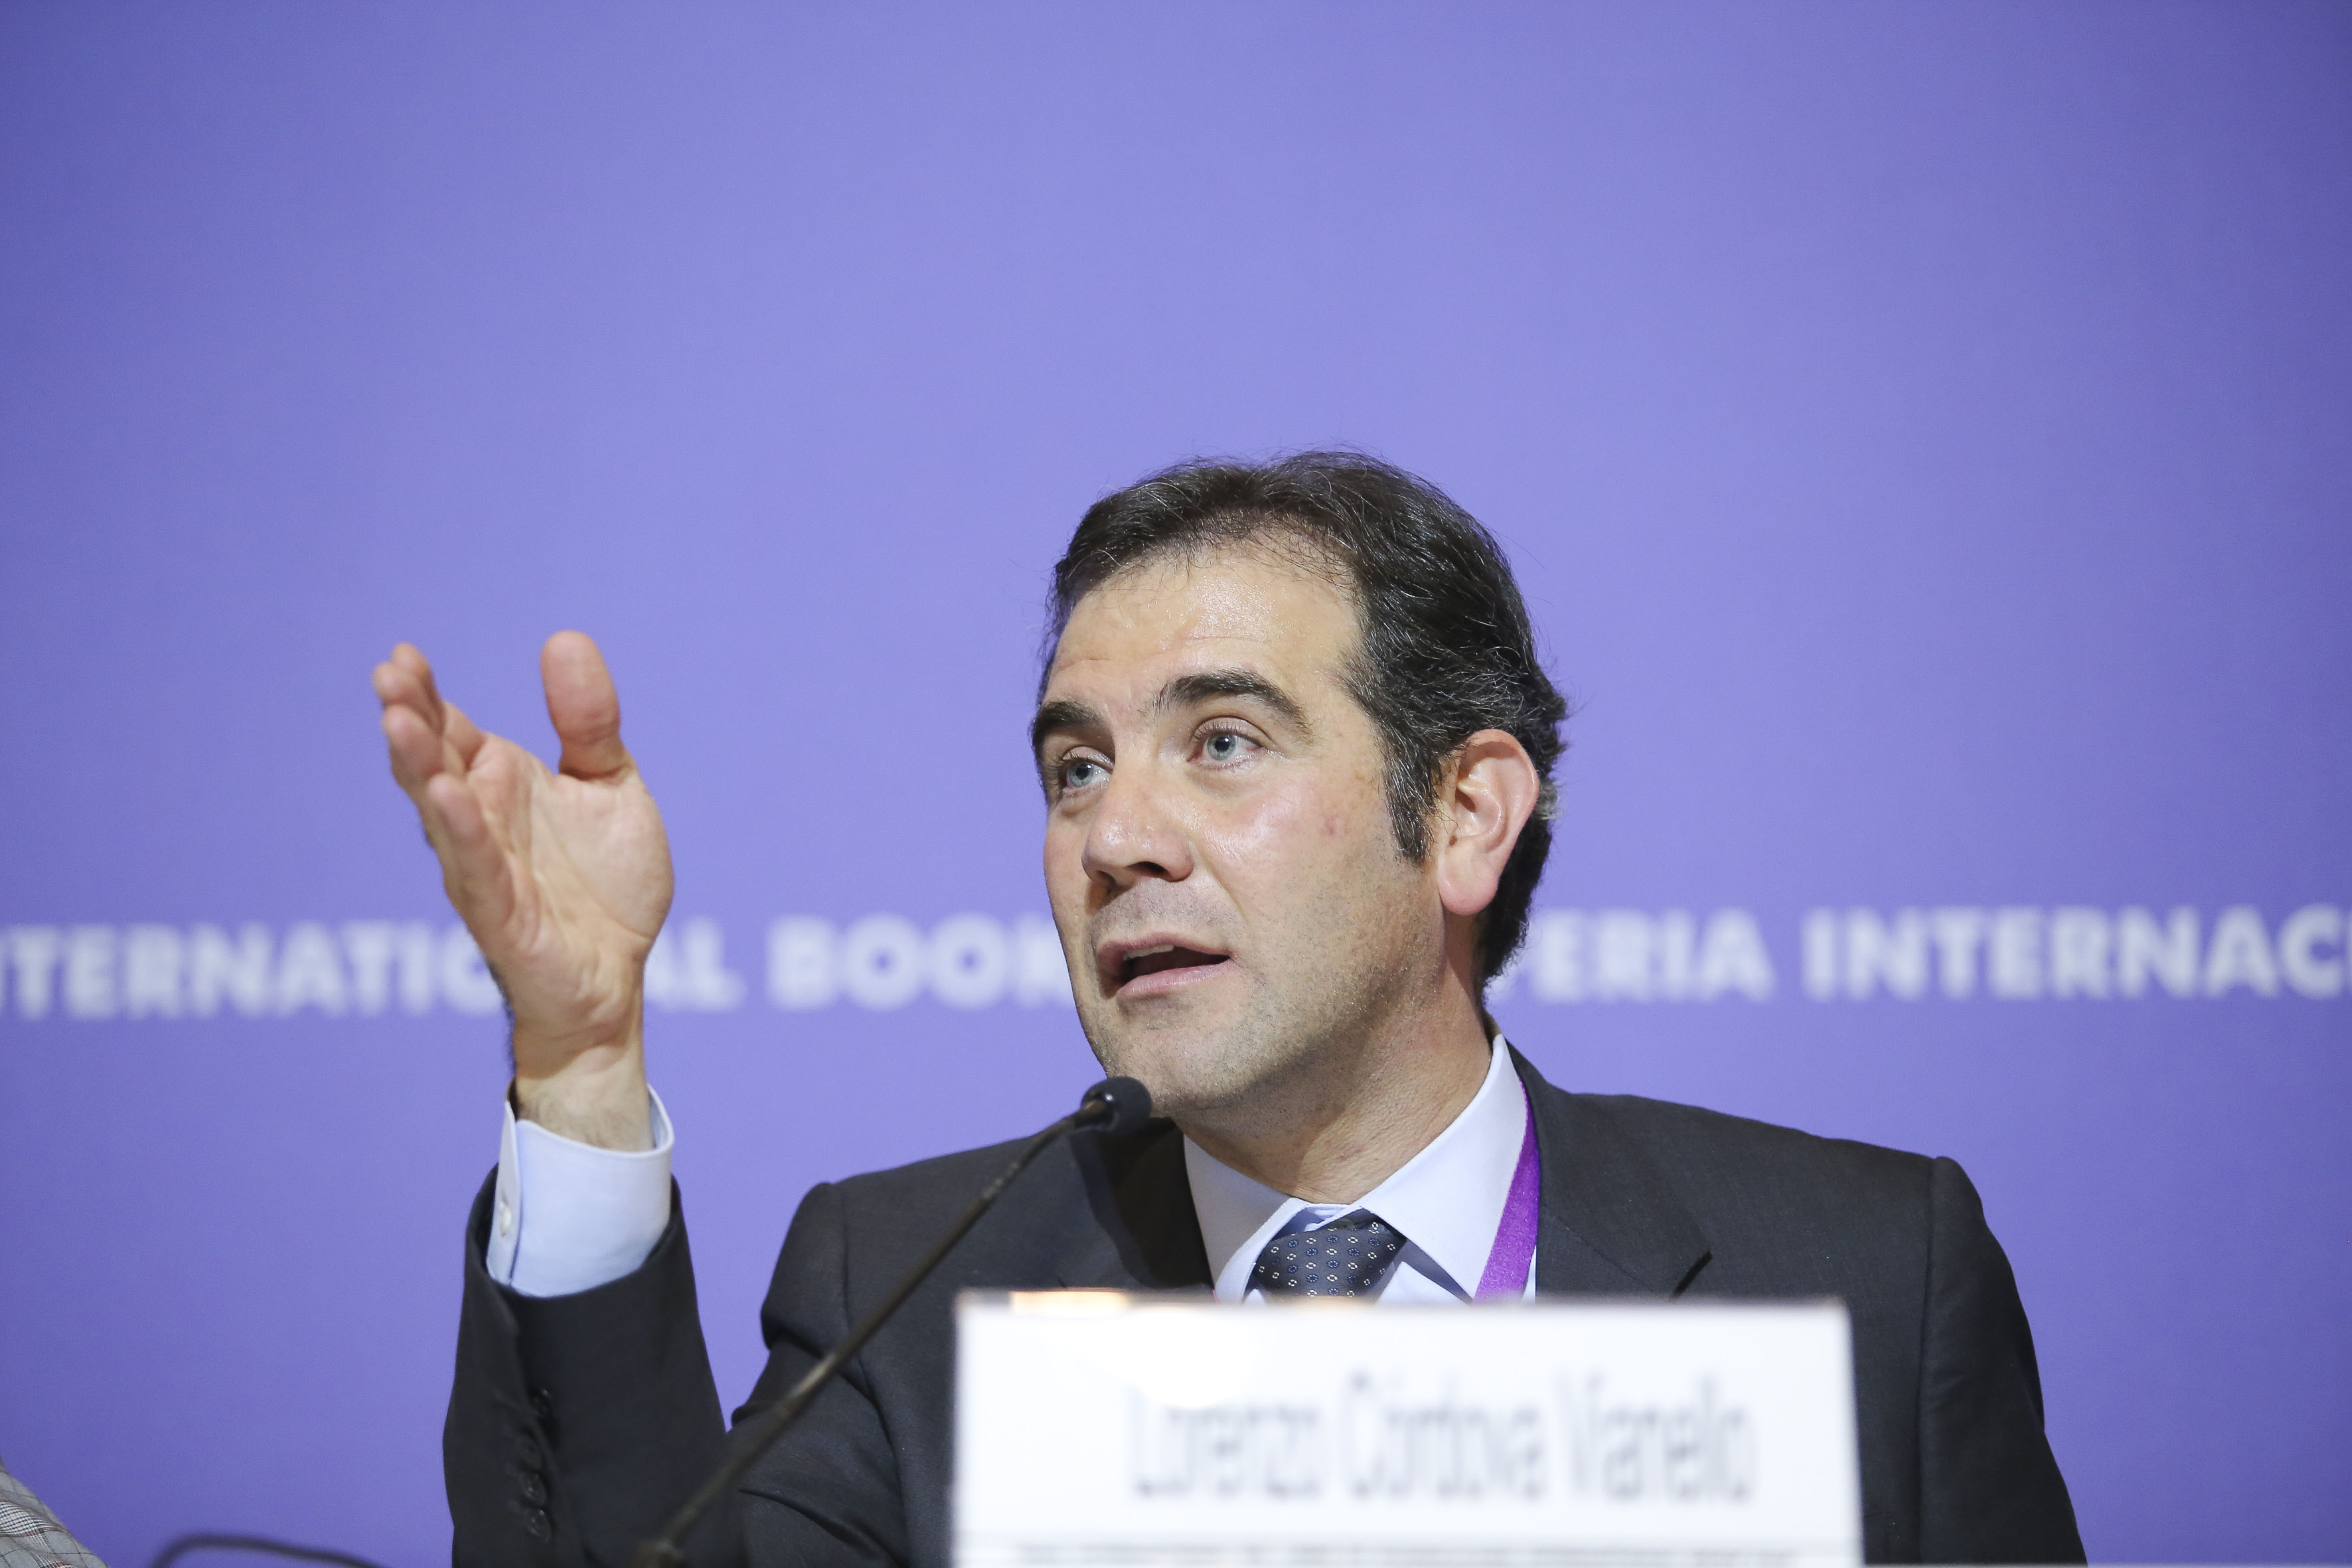 Presidente del Instituto Nacional Electoral (INE), doctor Lorenzo Córdova Vianello, haciendo uso de la palabra 